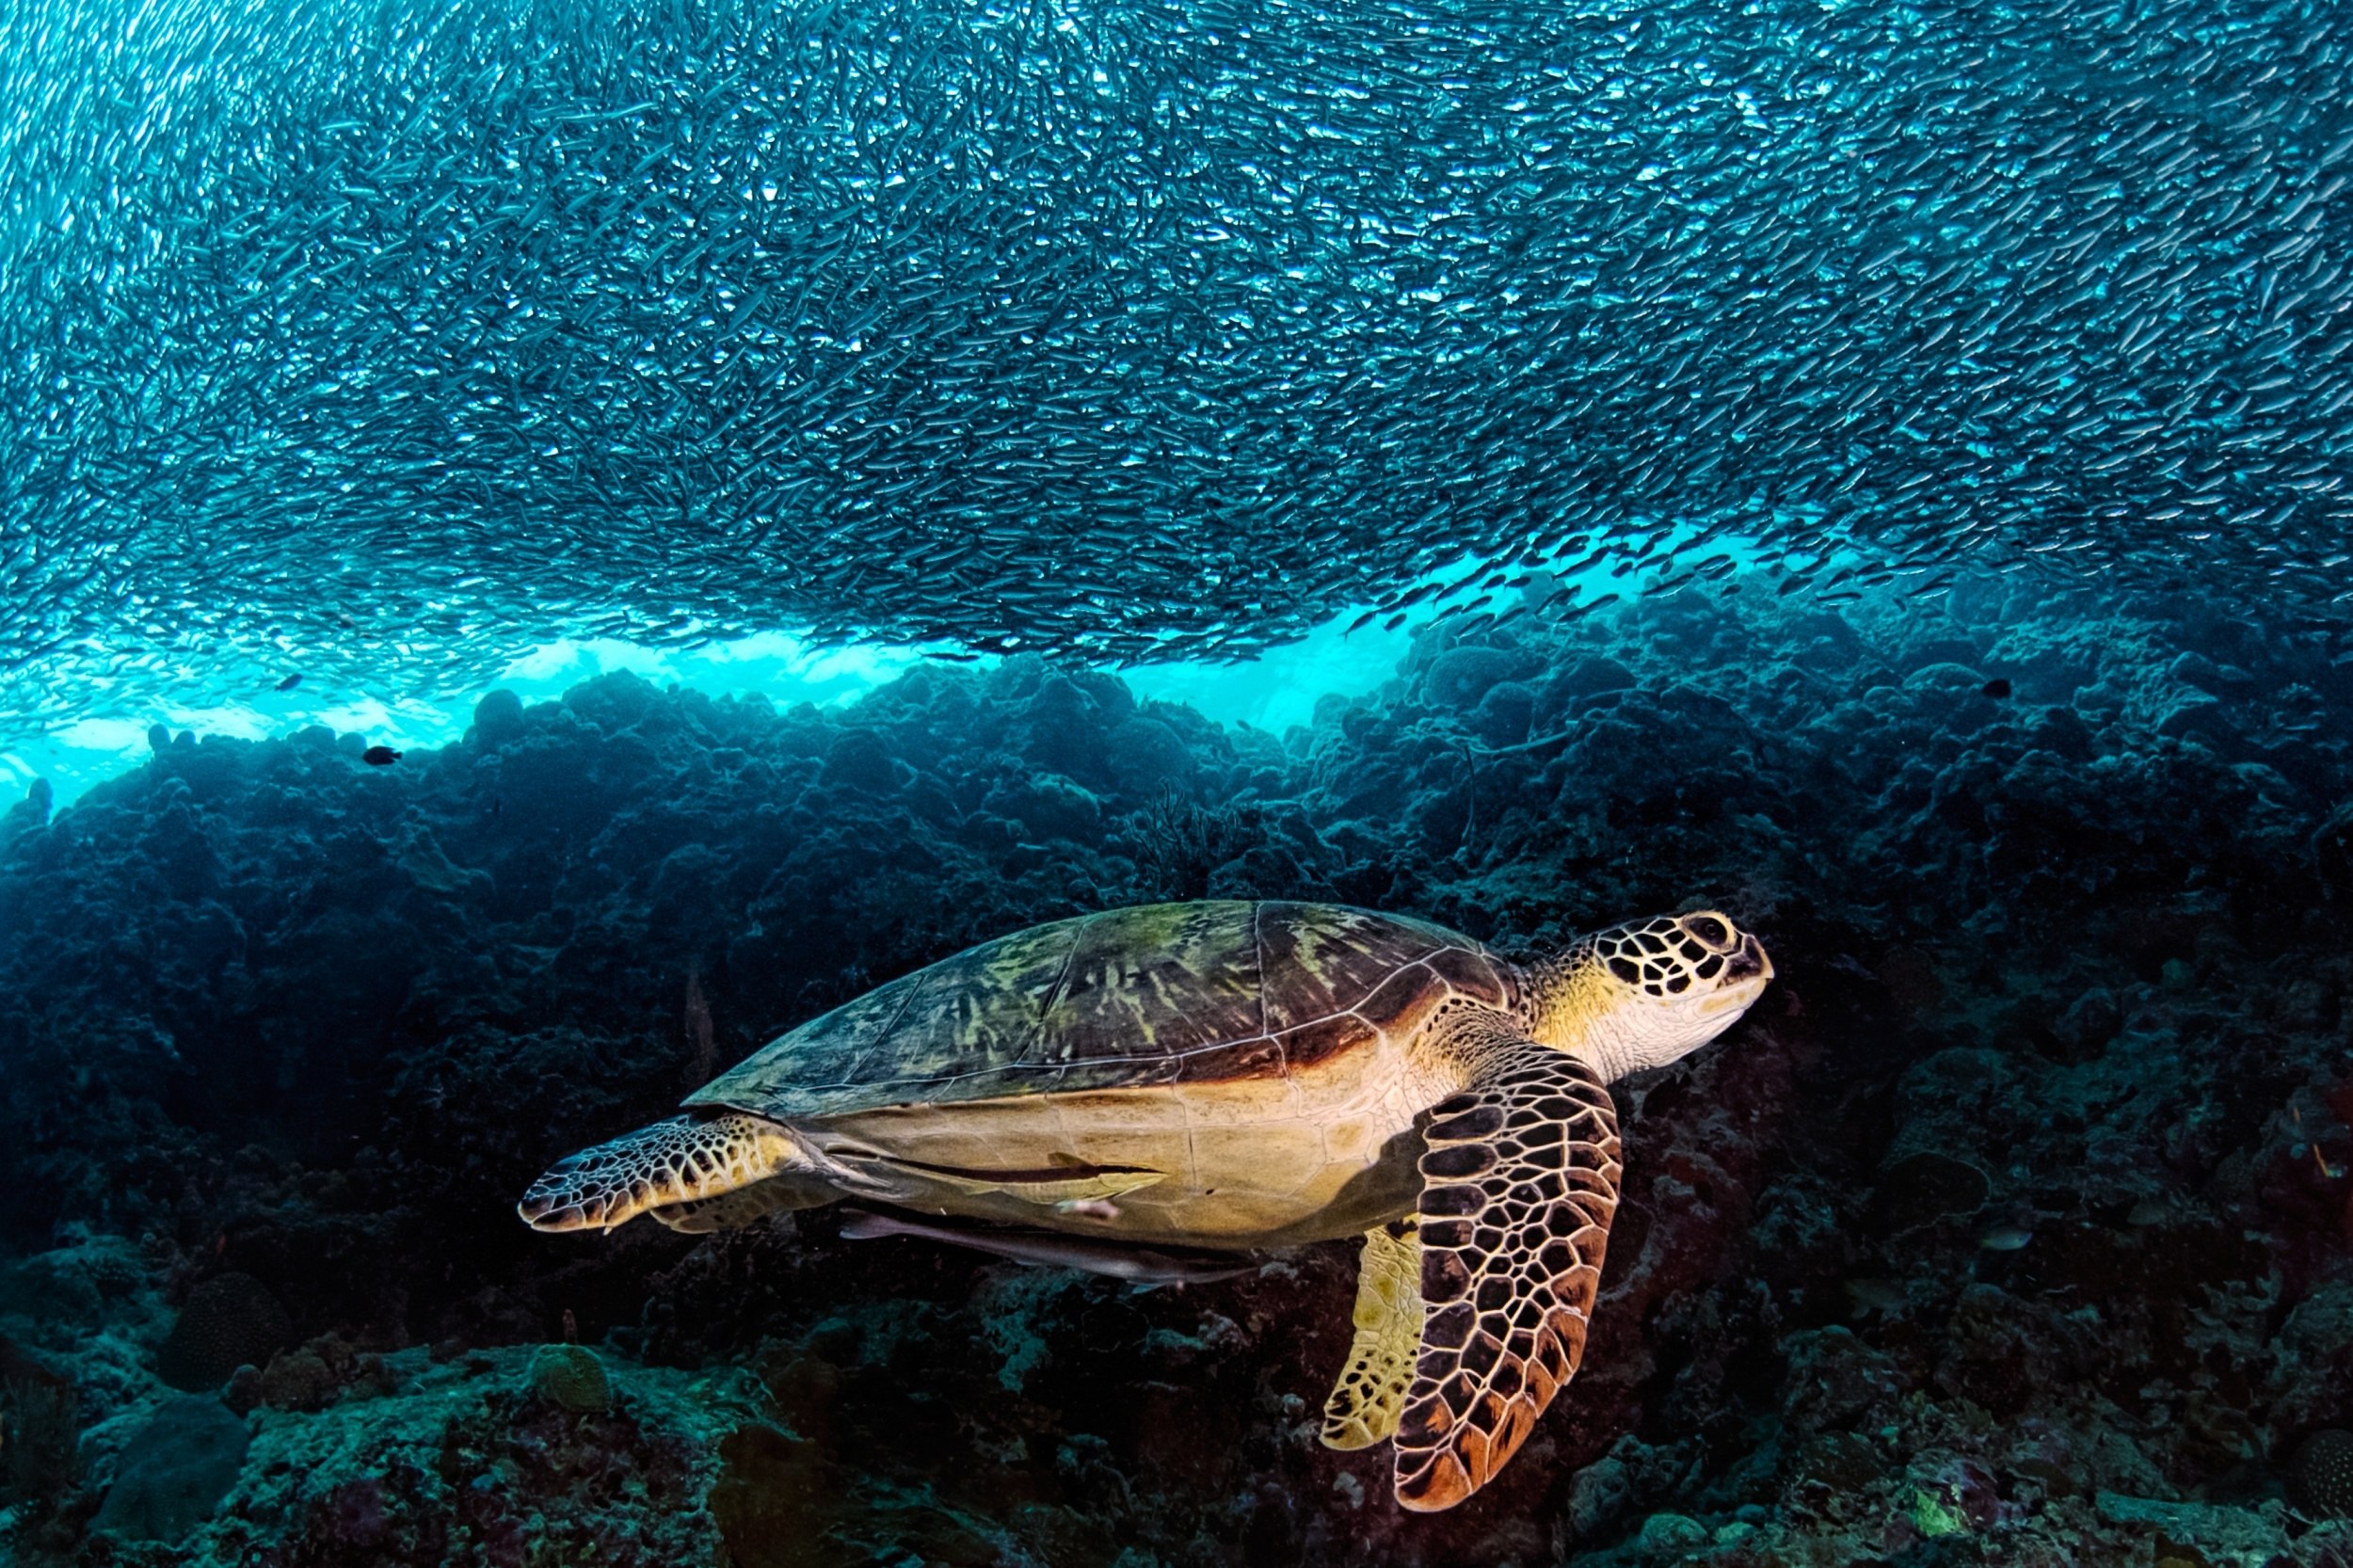 Морские черепахи жизнь. Атлантическая Ридлея черепаха. Черепаха бисса (Каретта). Морская черепаха бисса настоящая Каретта. Зеленая черепаха бисса атлантическая.